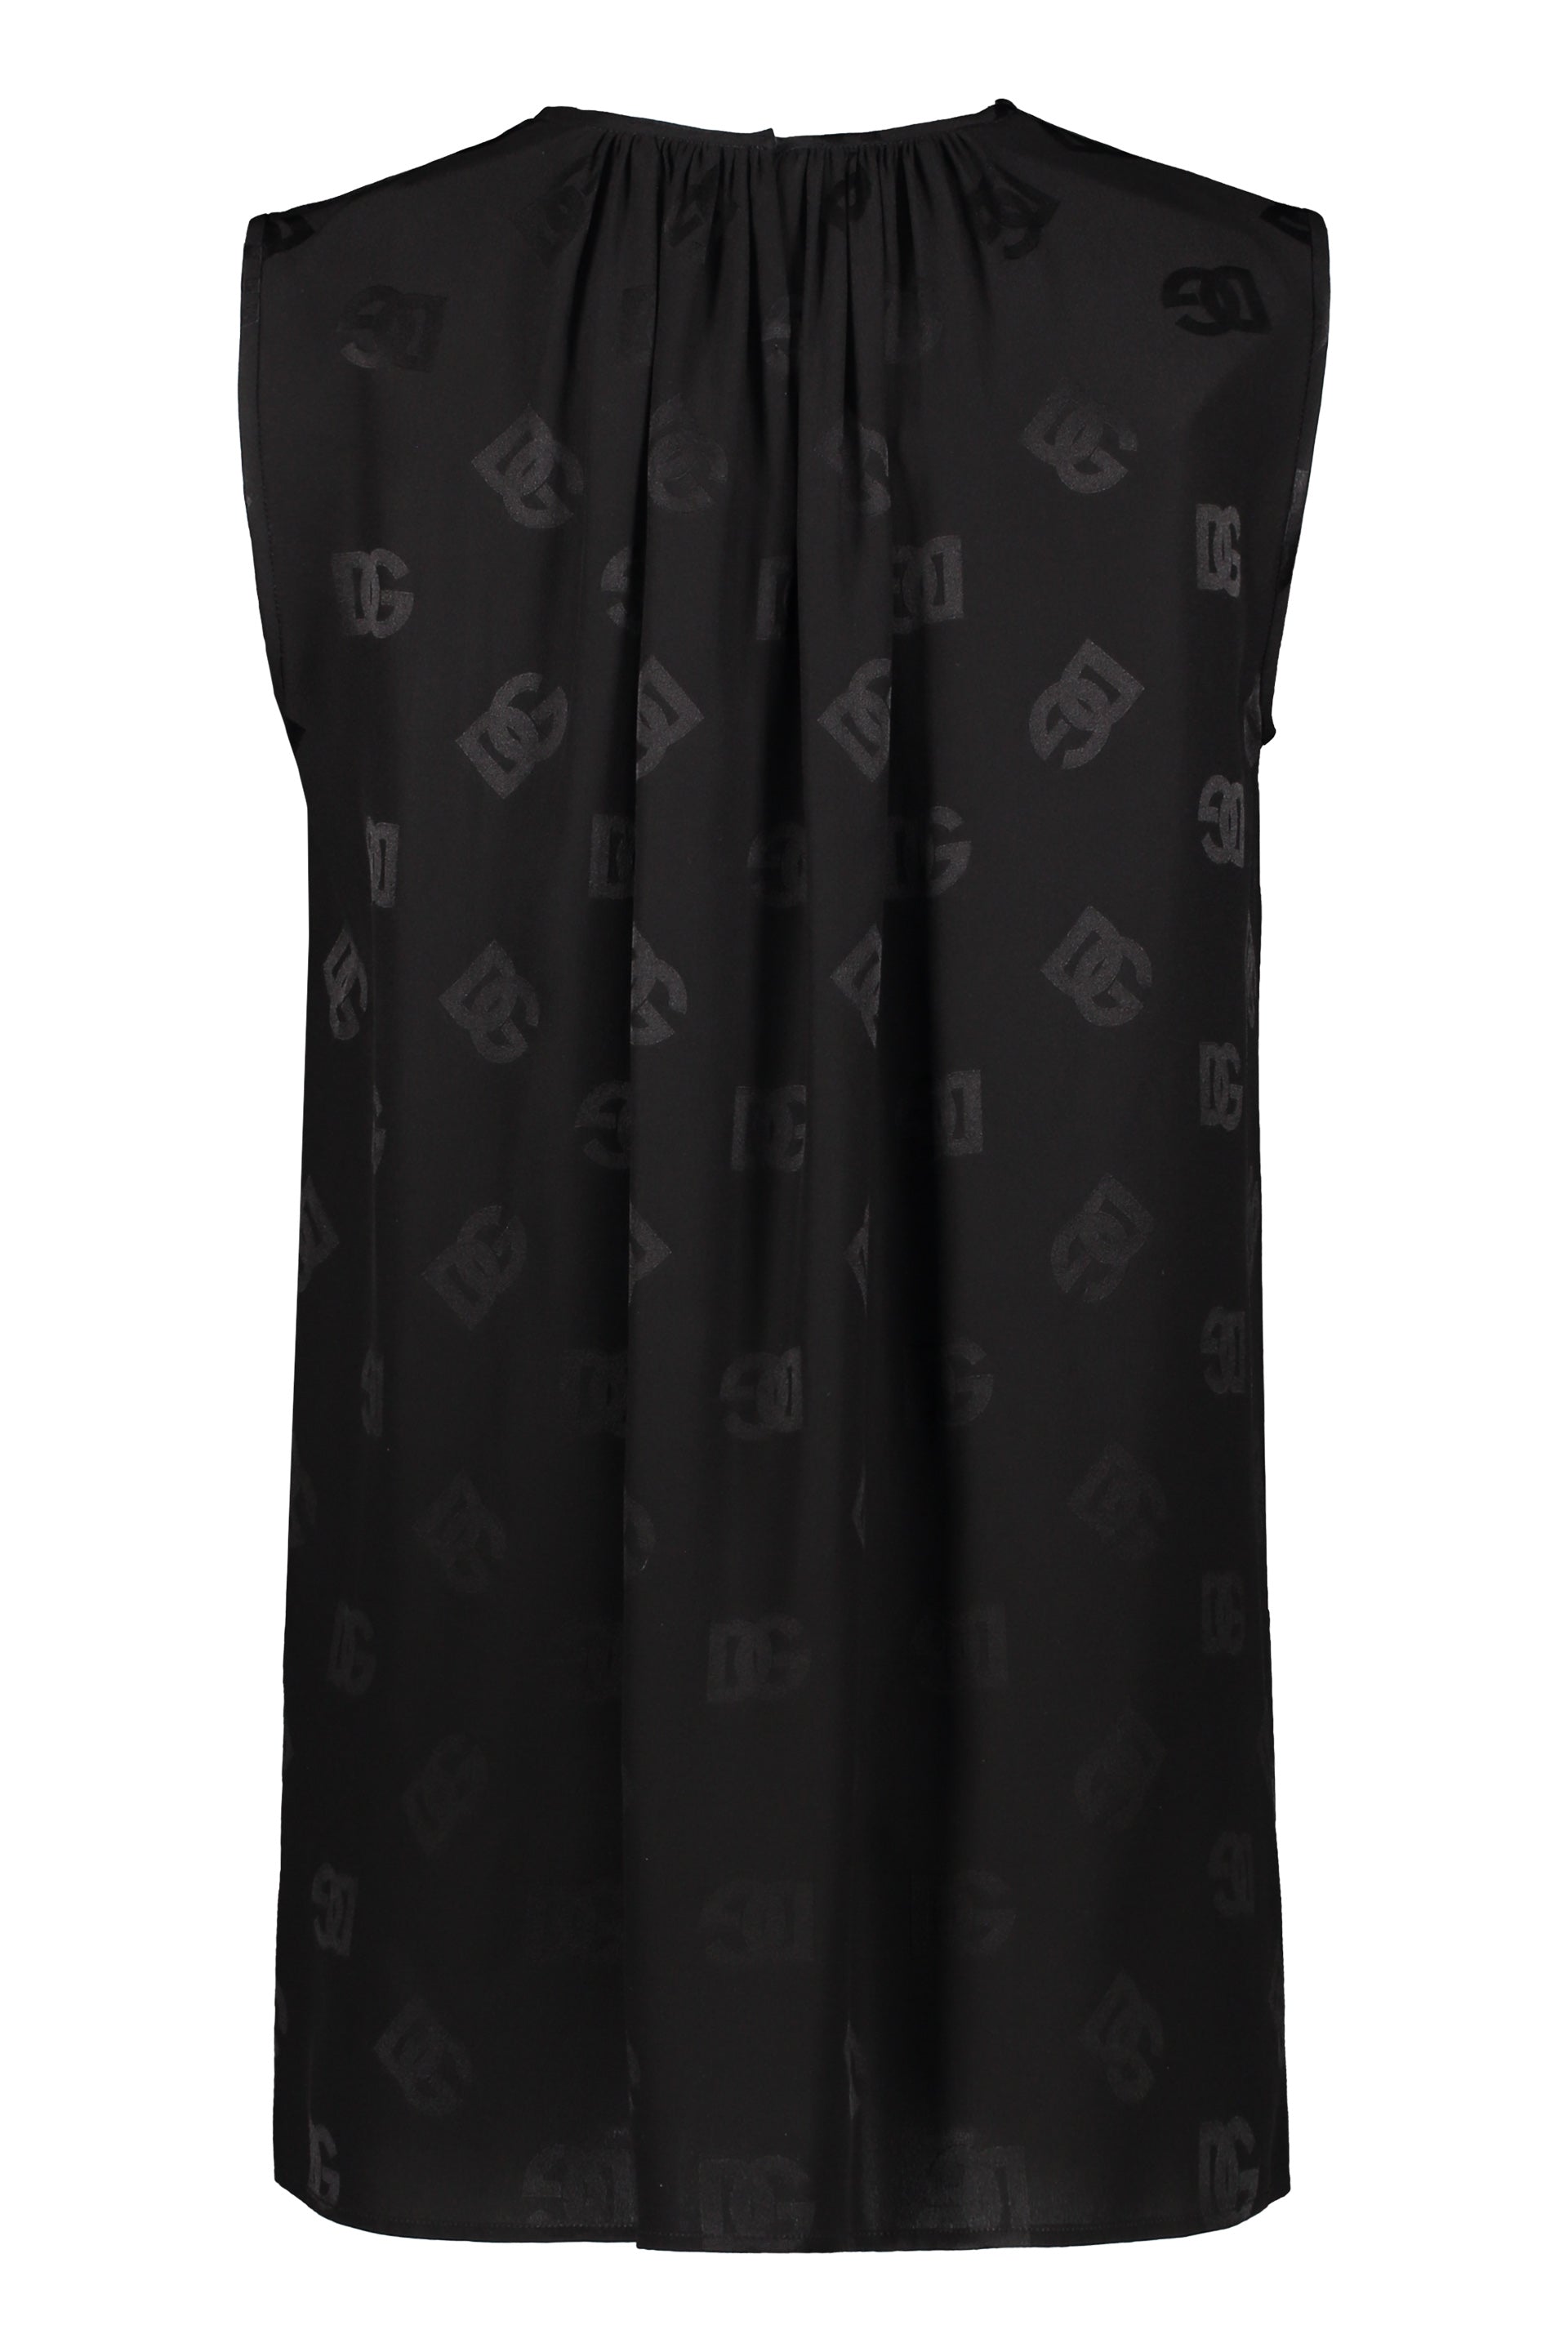 Dolce-Gabbana-OUTLET-SALE-Silk-blouse-Blusen-ARCHIVE-COLLECTION-2.jpg